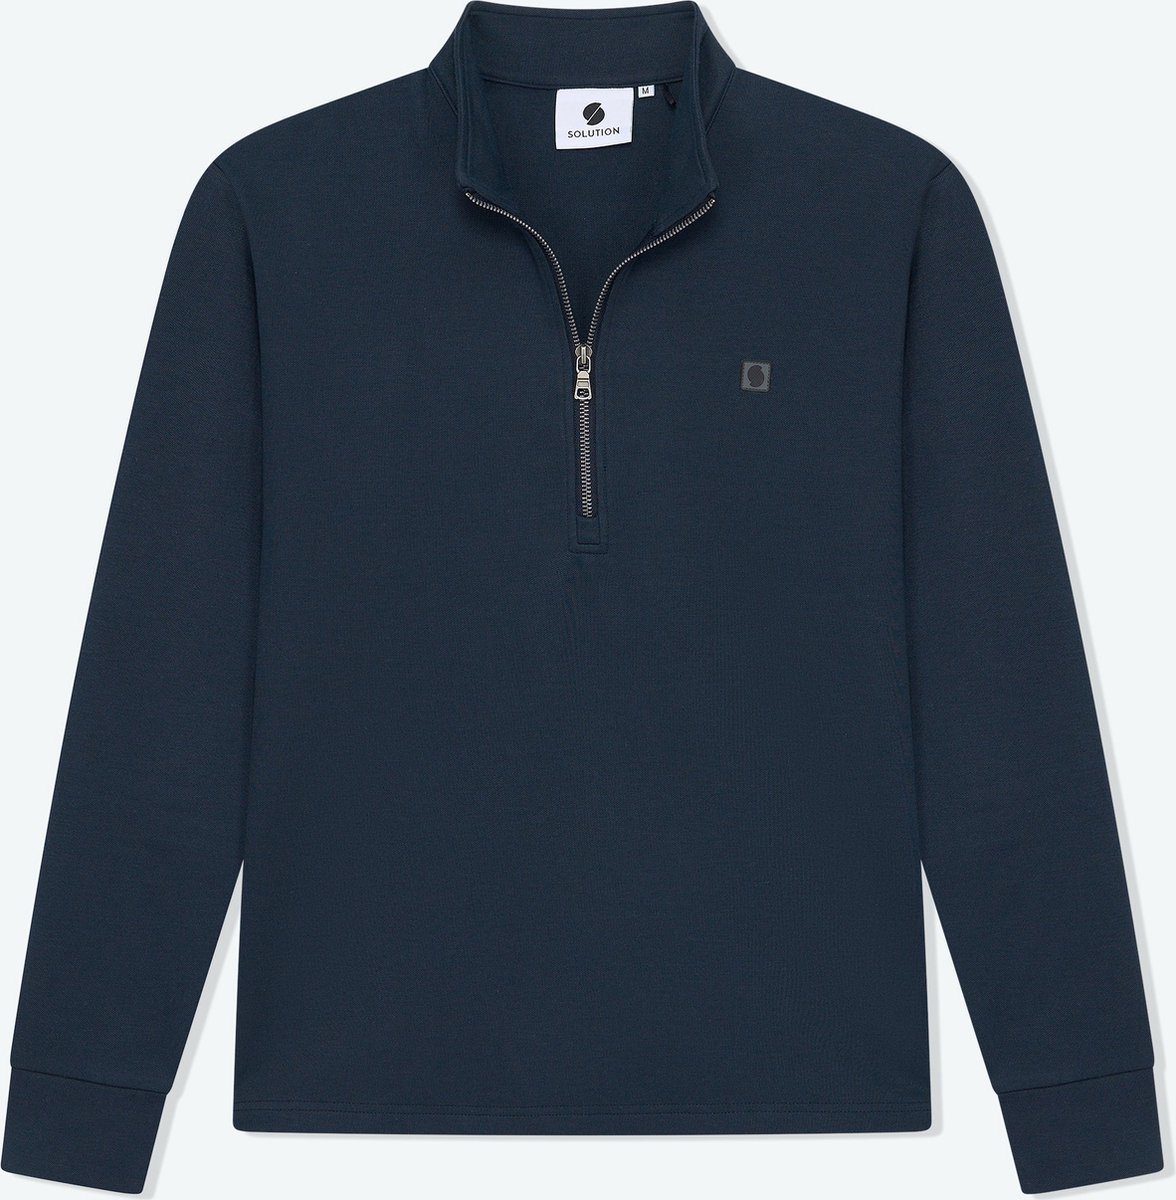 Zipper sweater Salvador Navy - L - Solution Clothing